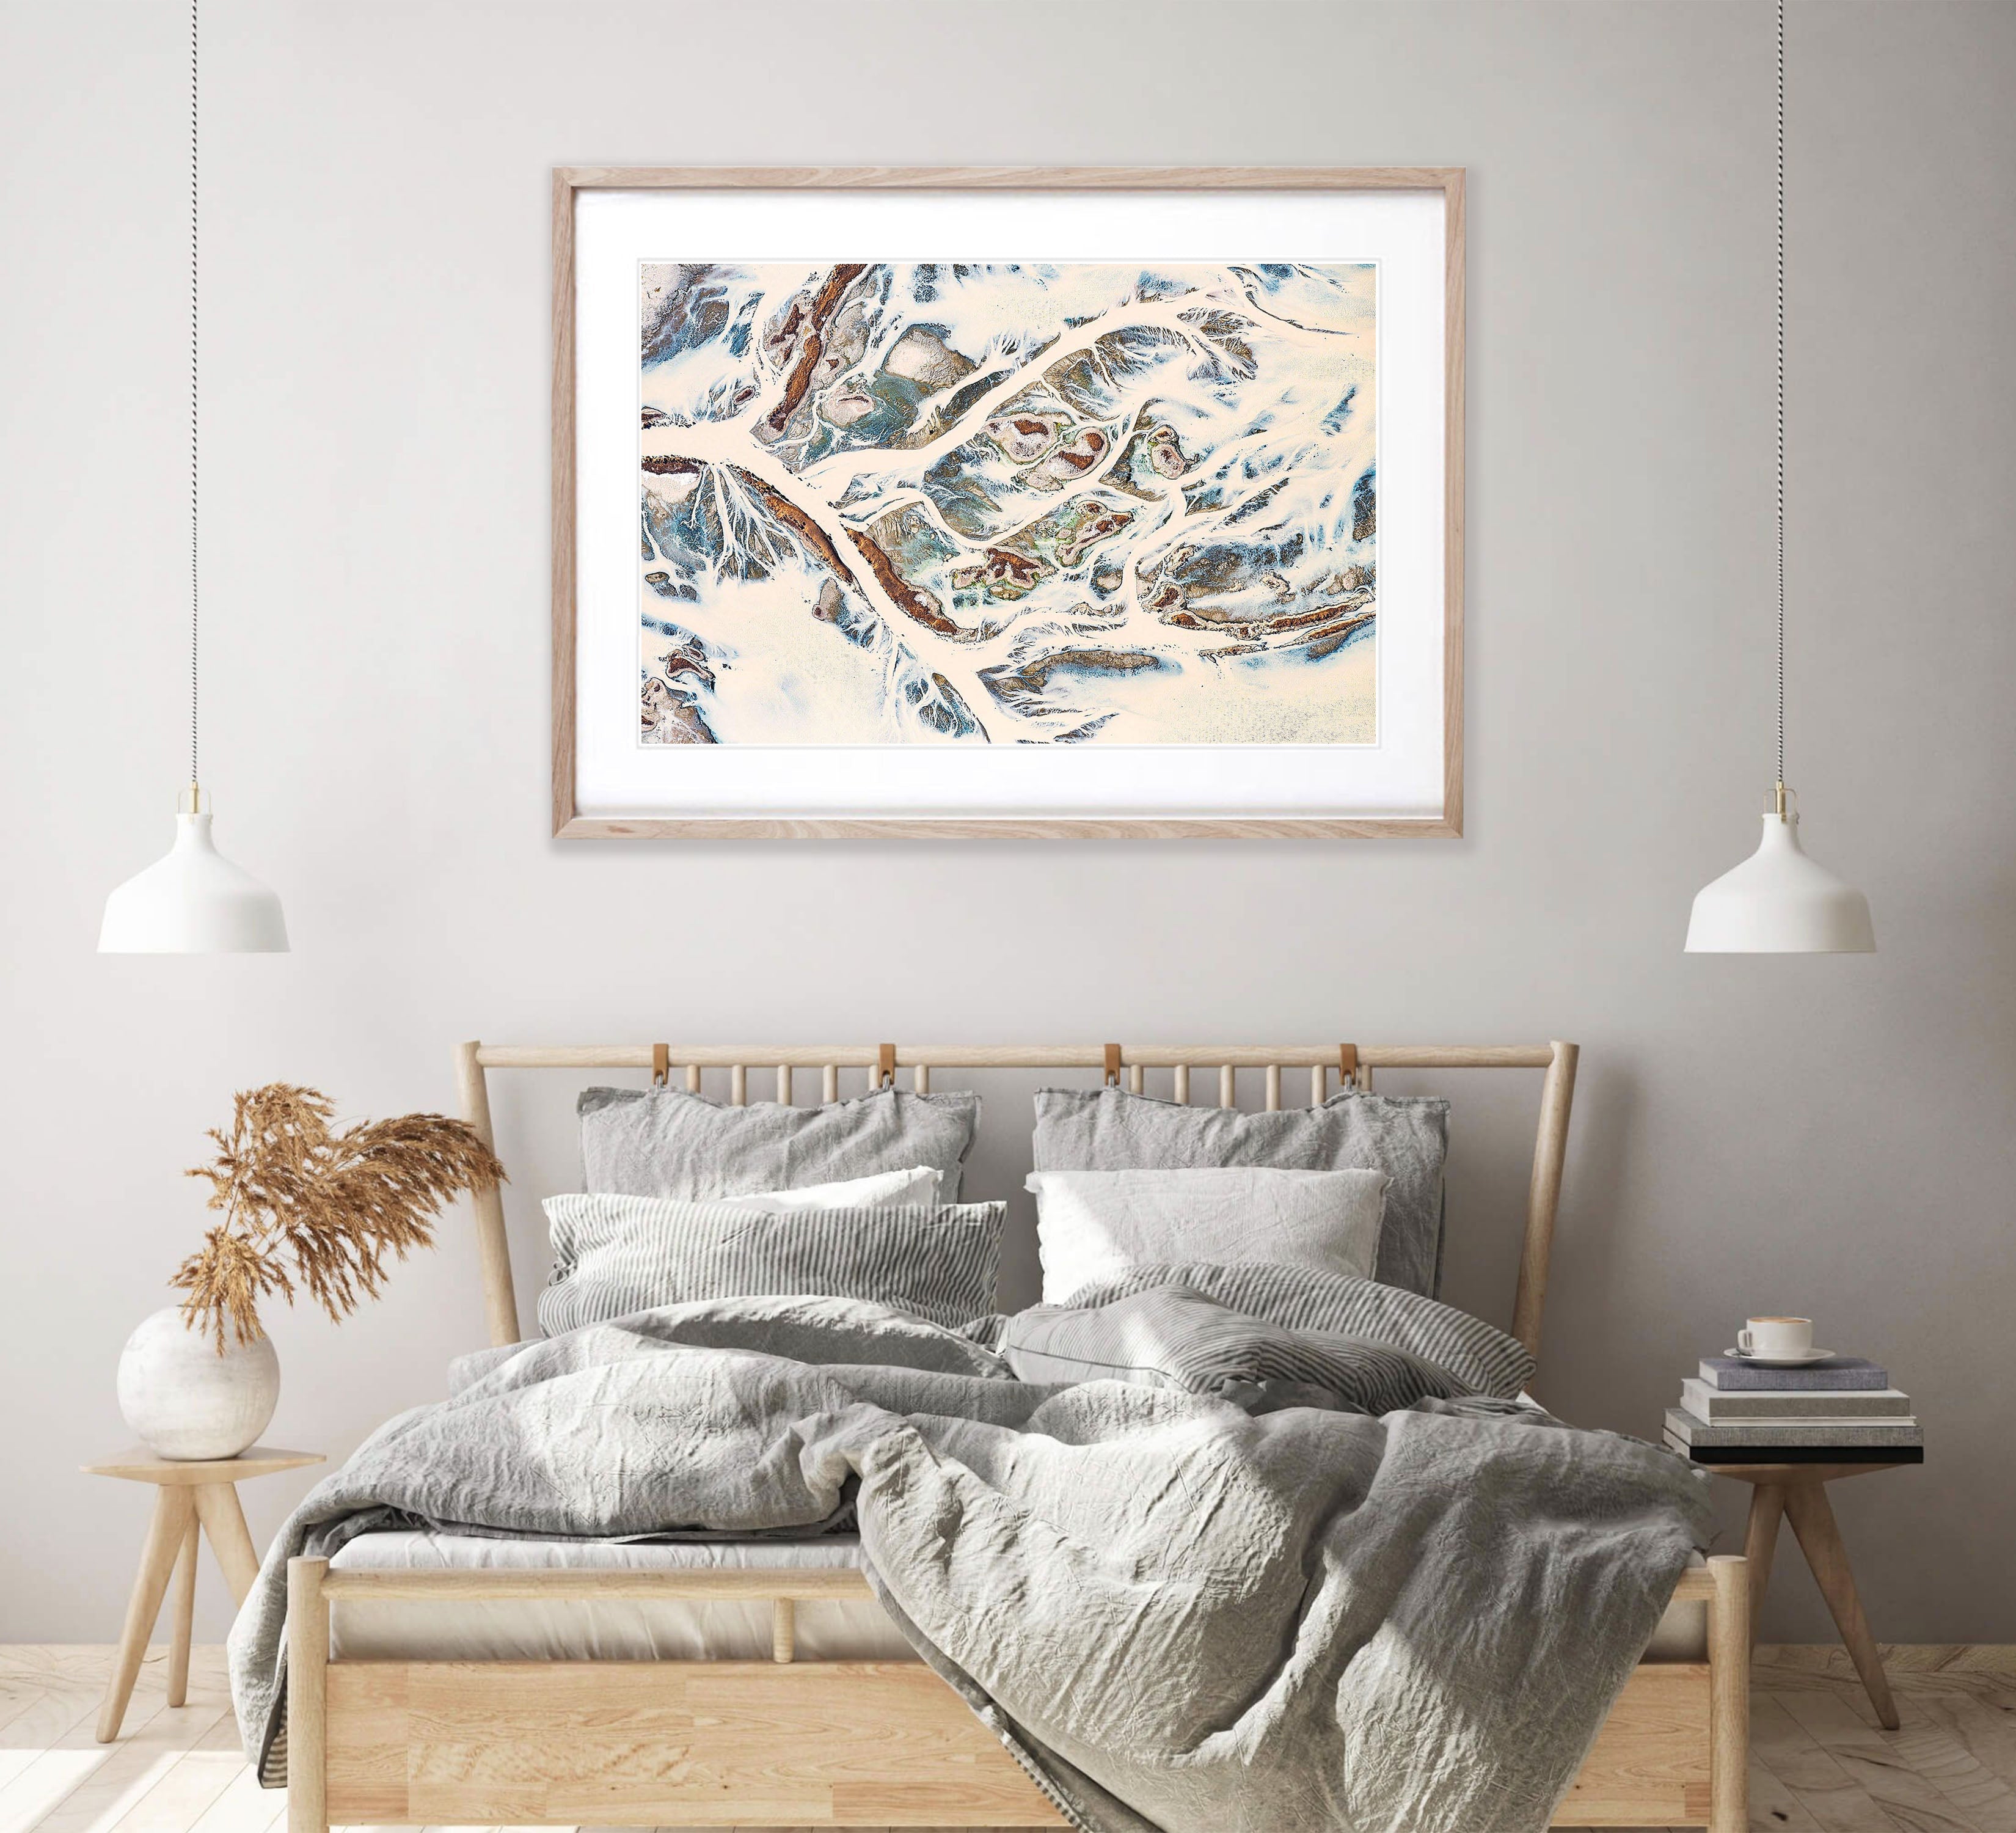 ARTWORK INSTOCK -  Desert Rains - Available 150 x 120cms Raw Oak Framed Print in the gallery TODAY!